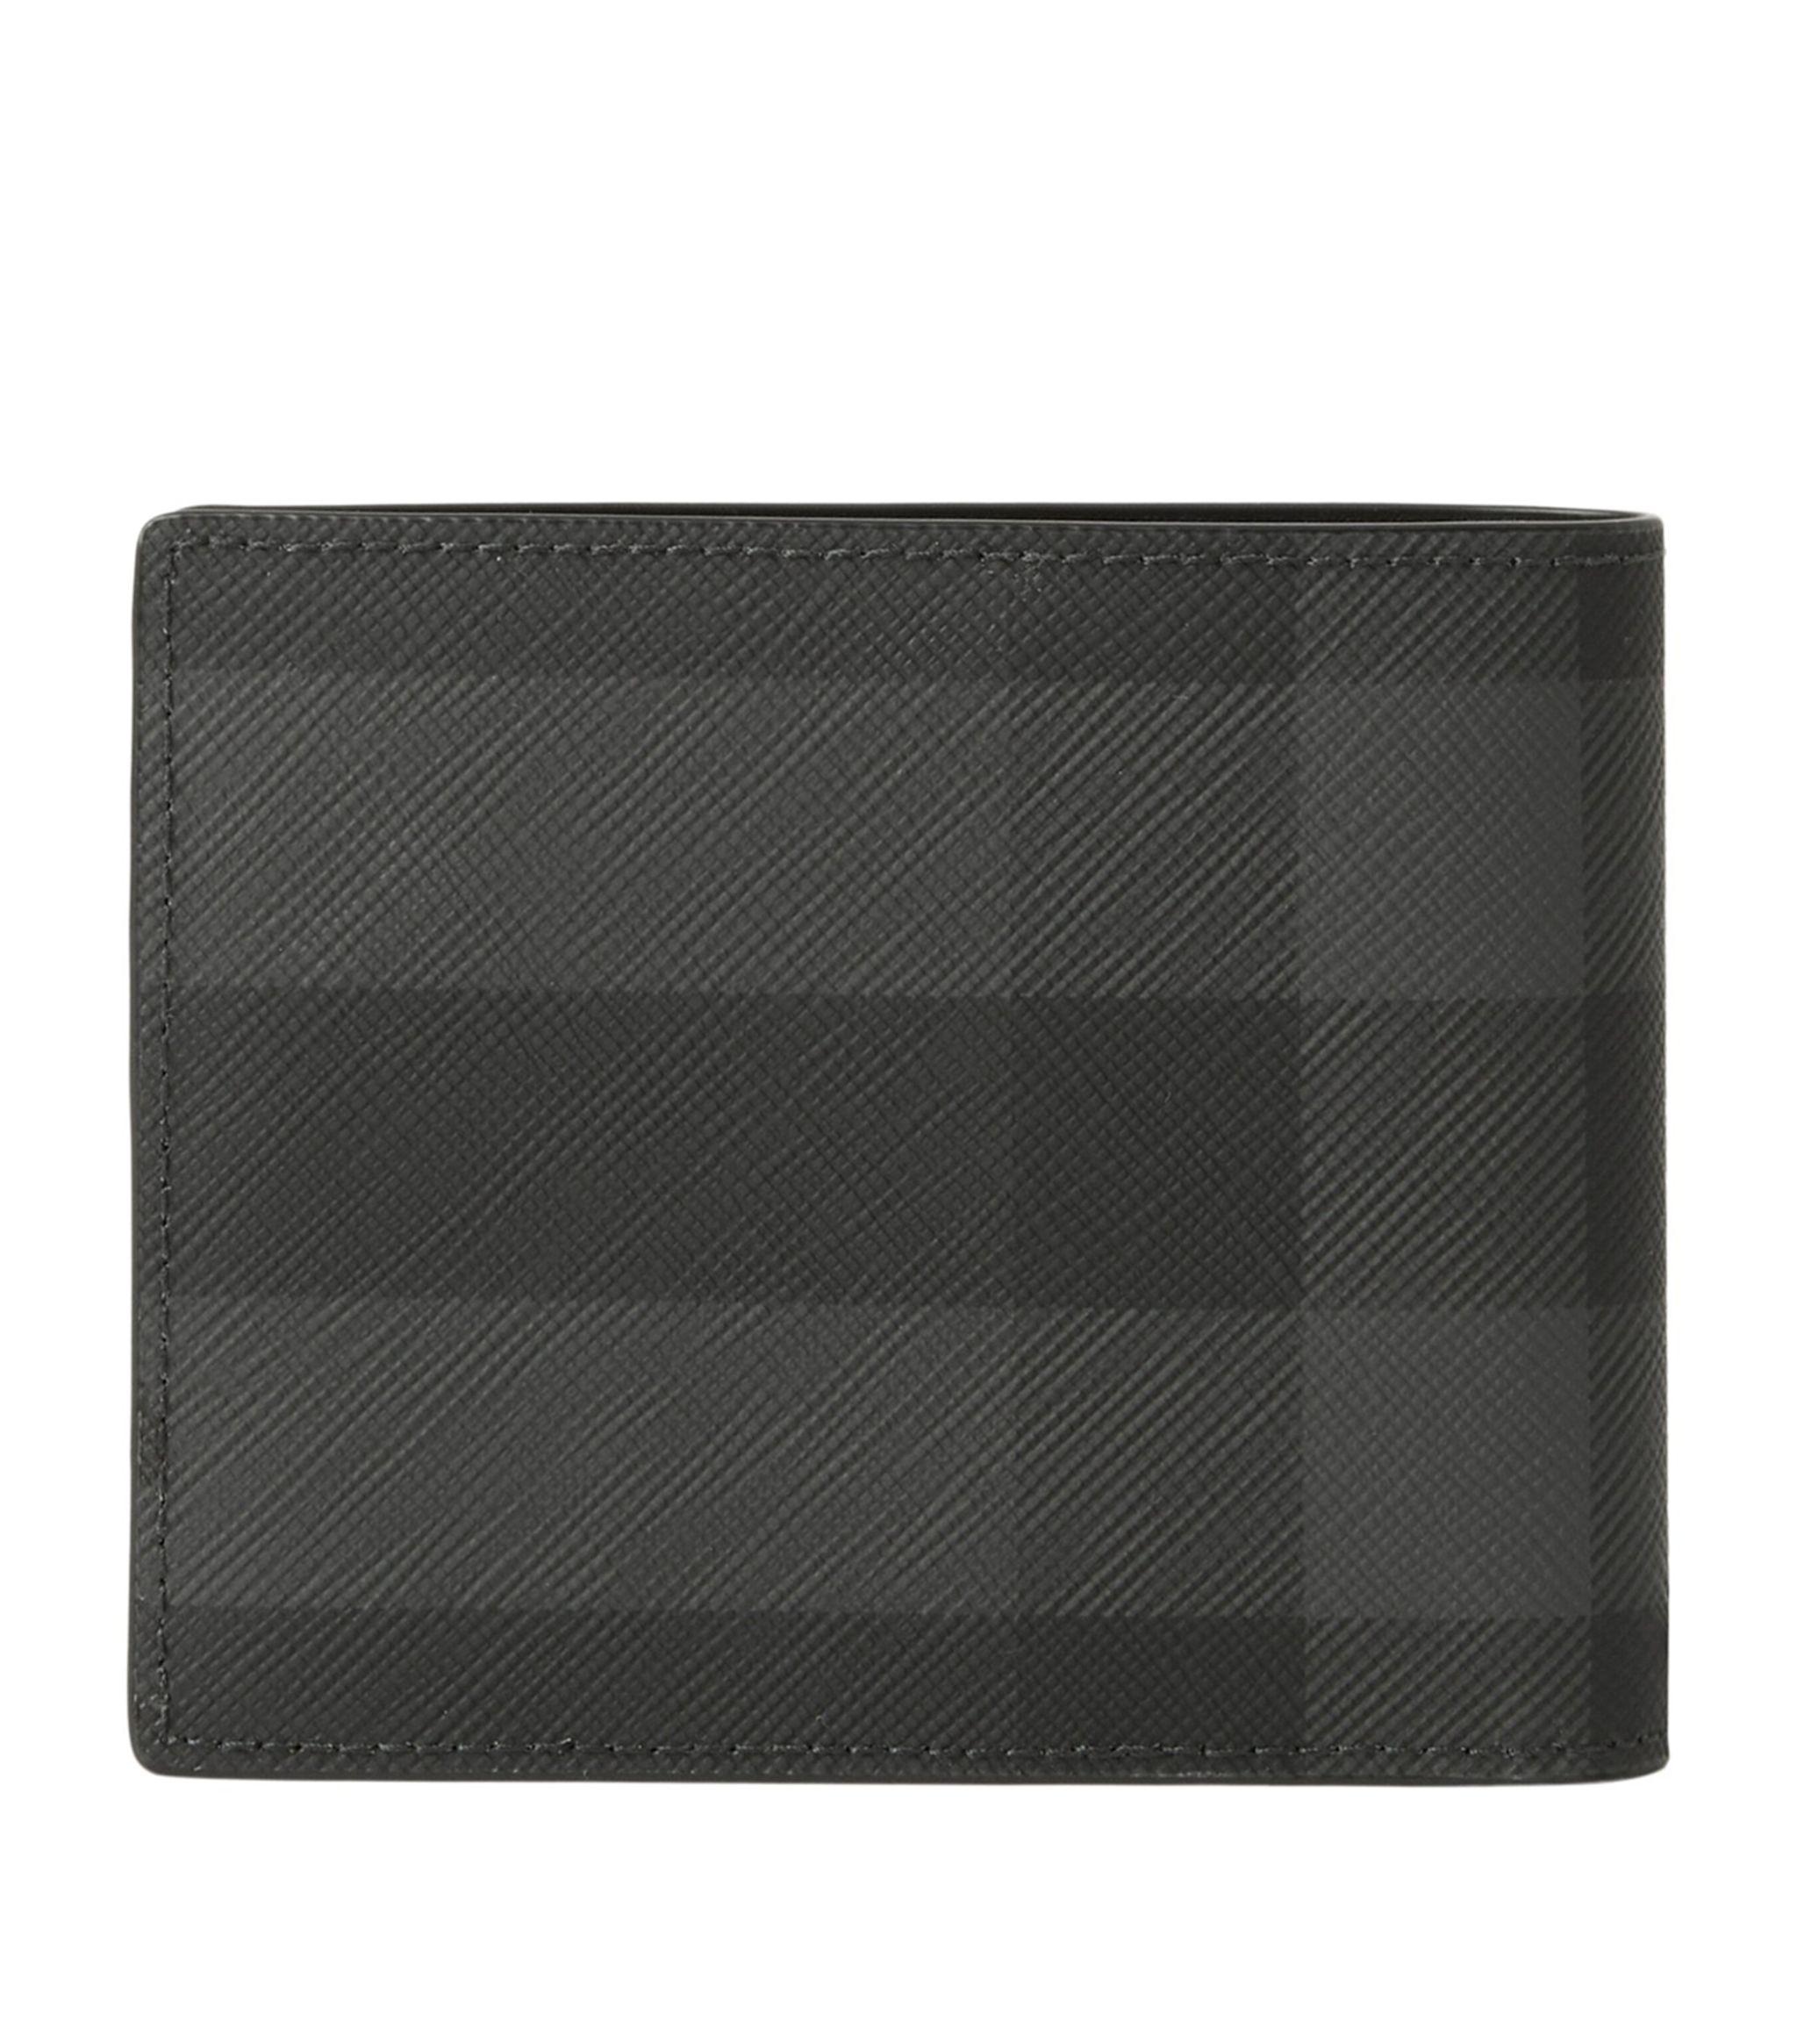 Burberry: Gray & Black Check Wallet